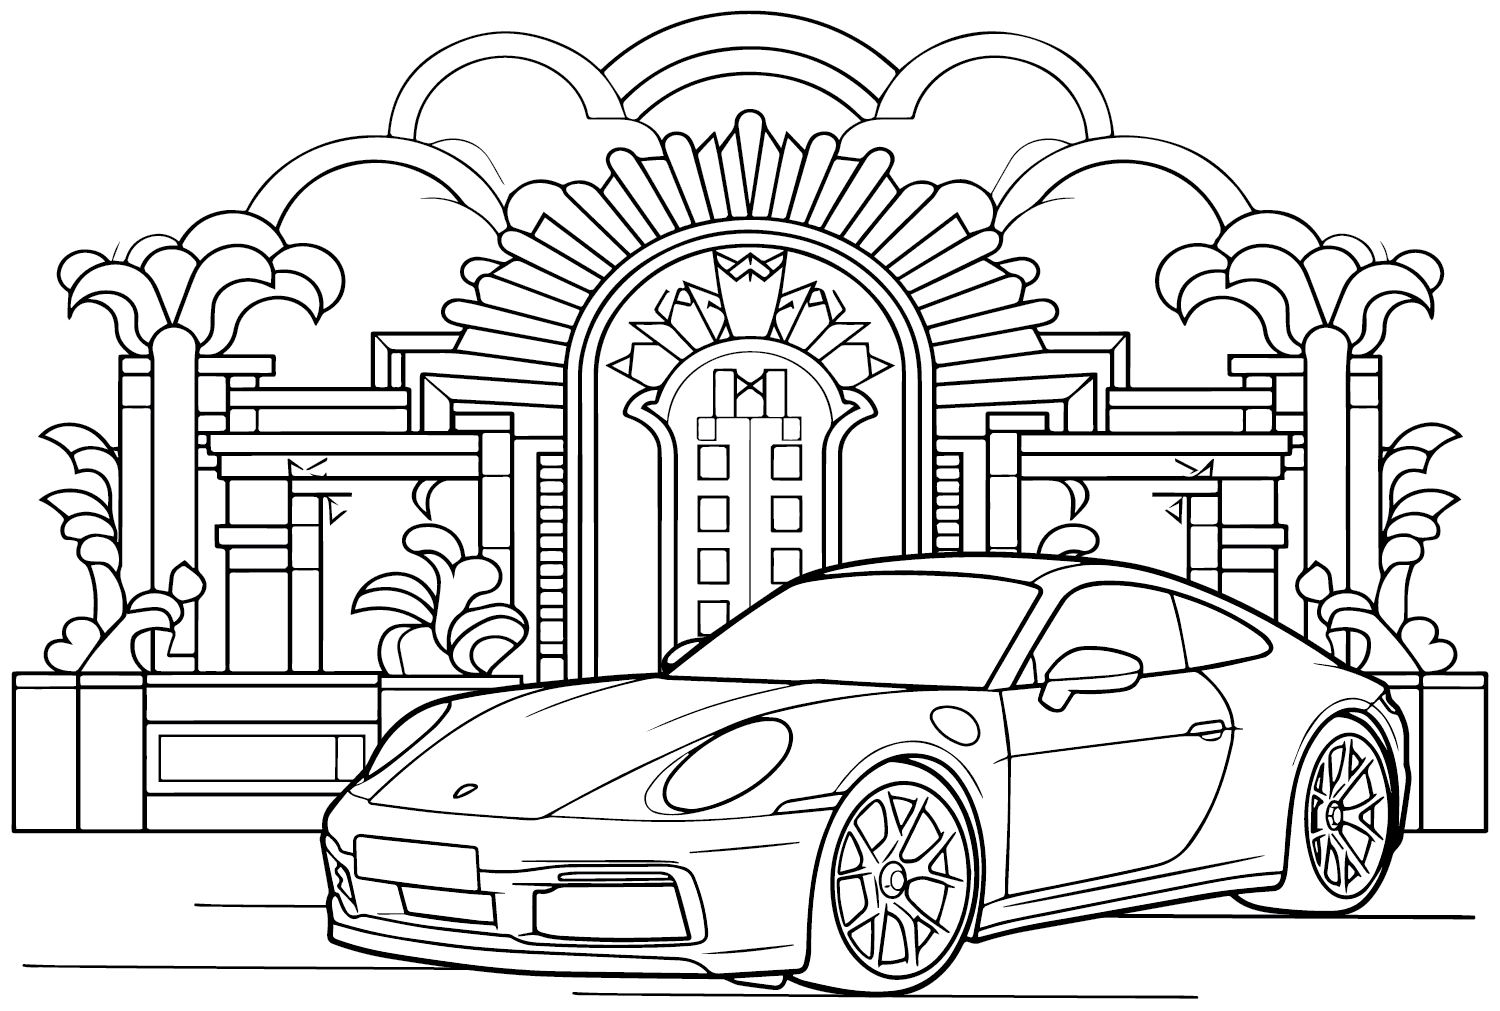 Porsche 911 Carrera S 2019 Coloring Page from Porsche